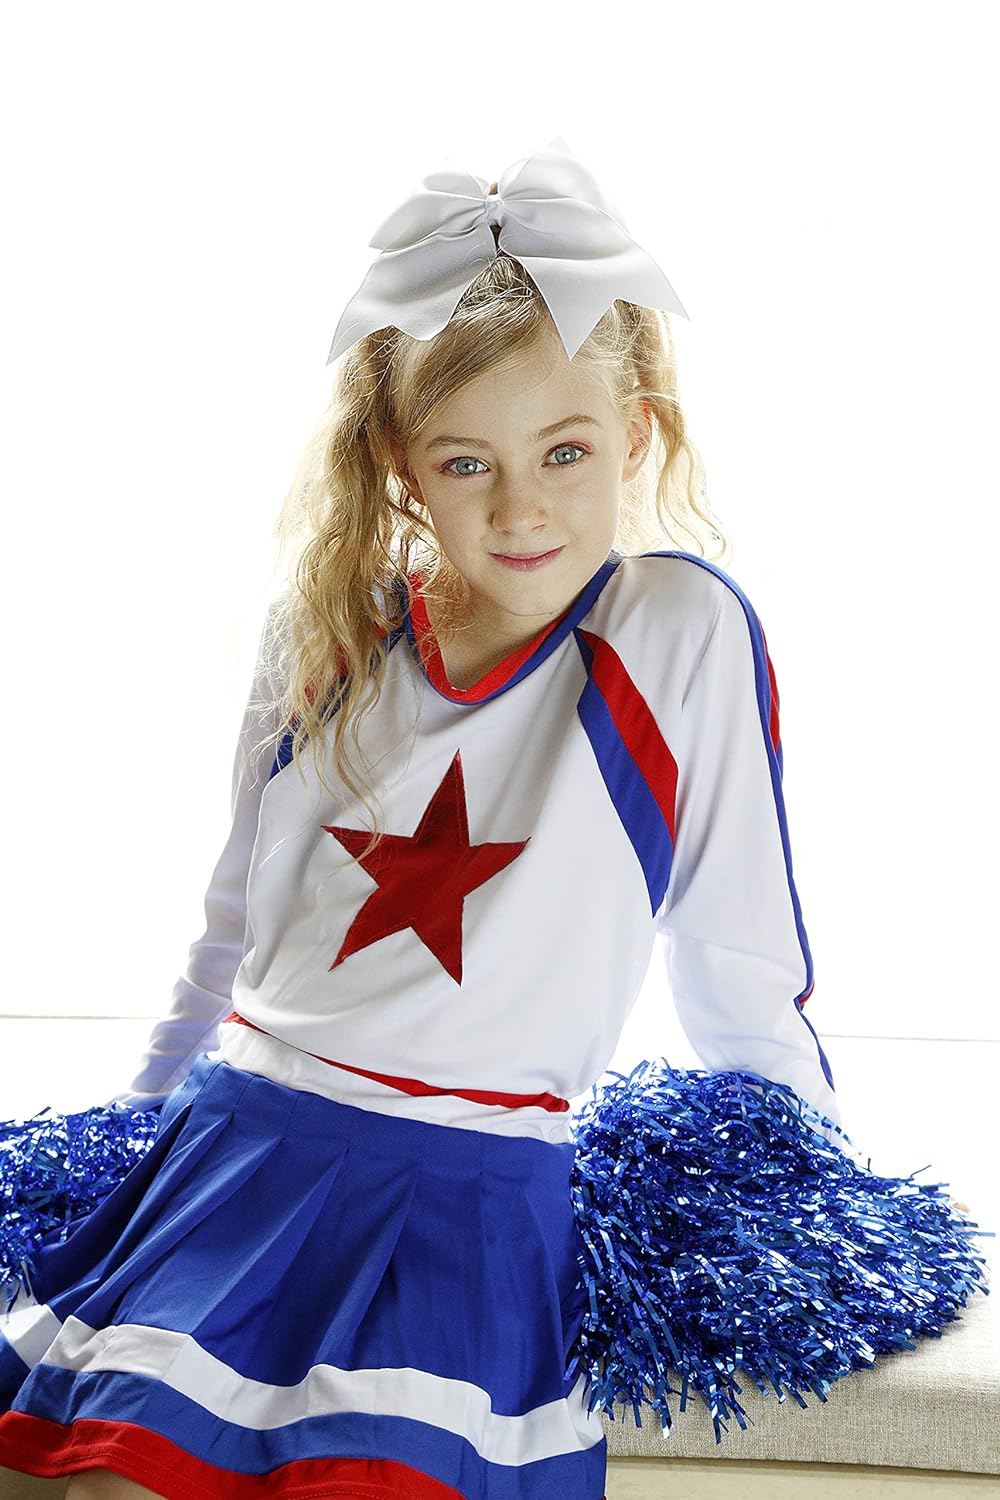 16PCS 8" Large Cheer Bows Hair Bows Ponytail Holder Handmade for Girls Teens Softball Cheerleader Sports -White